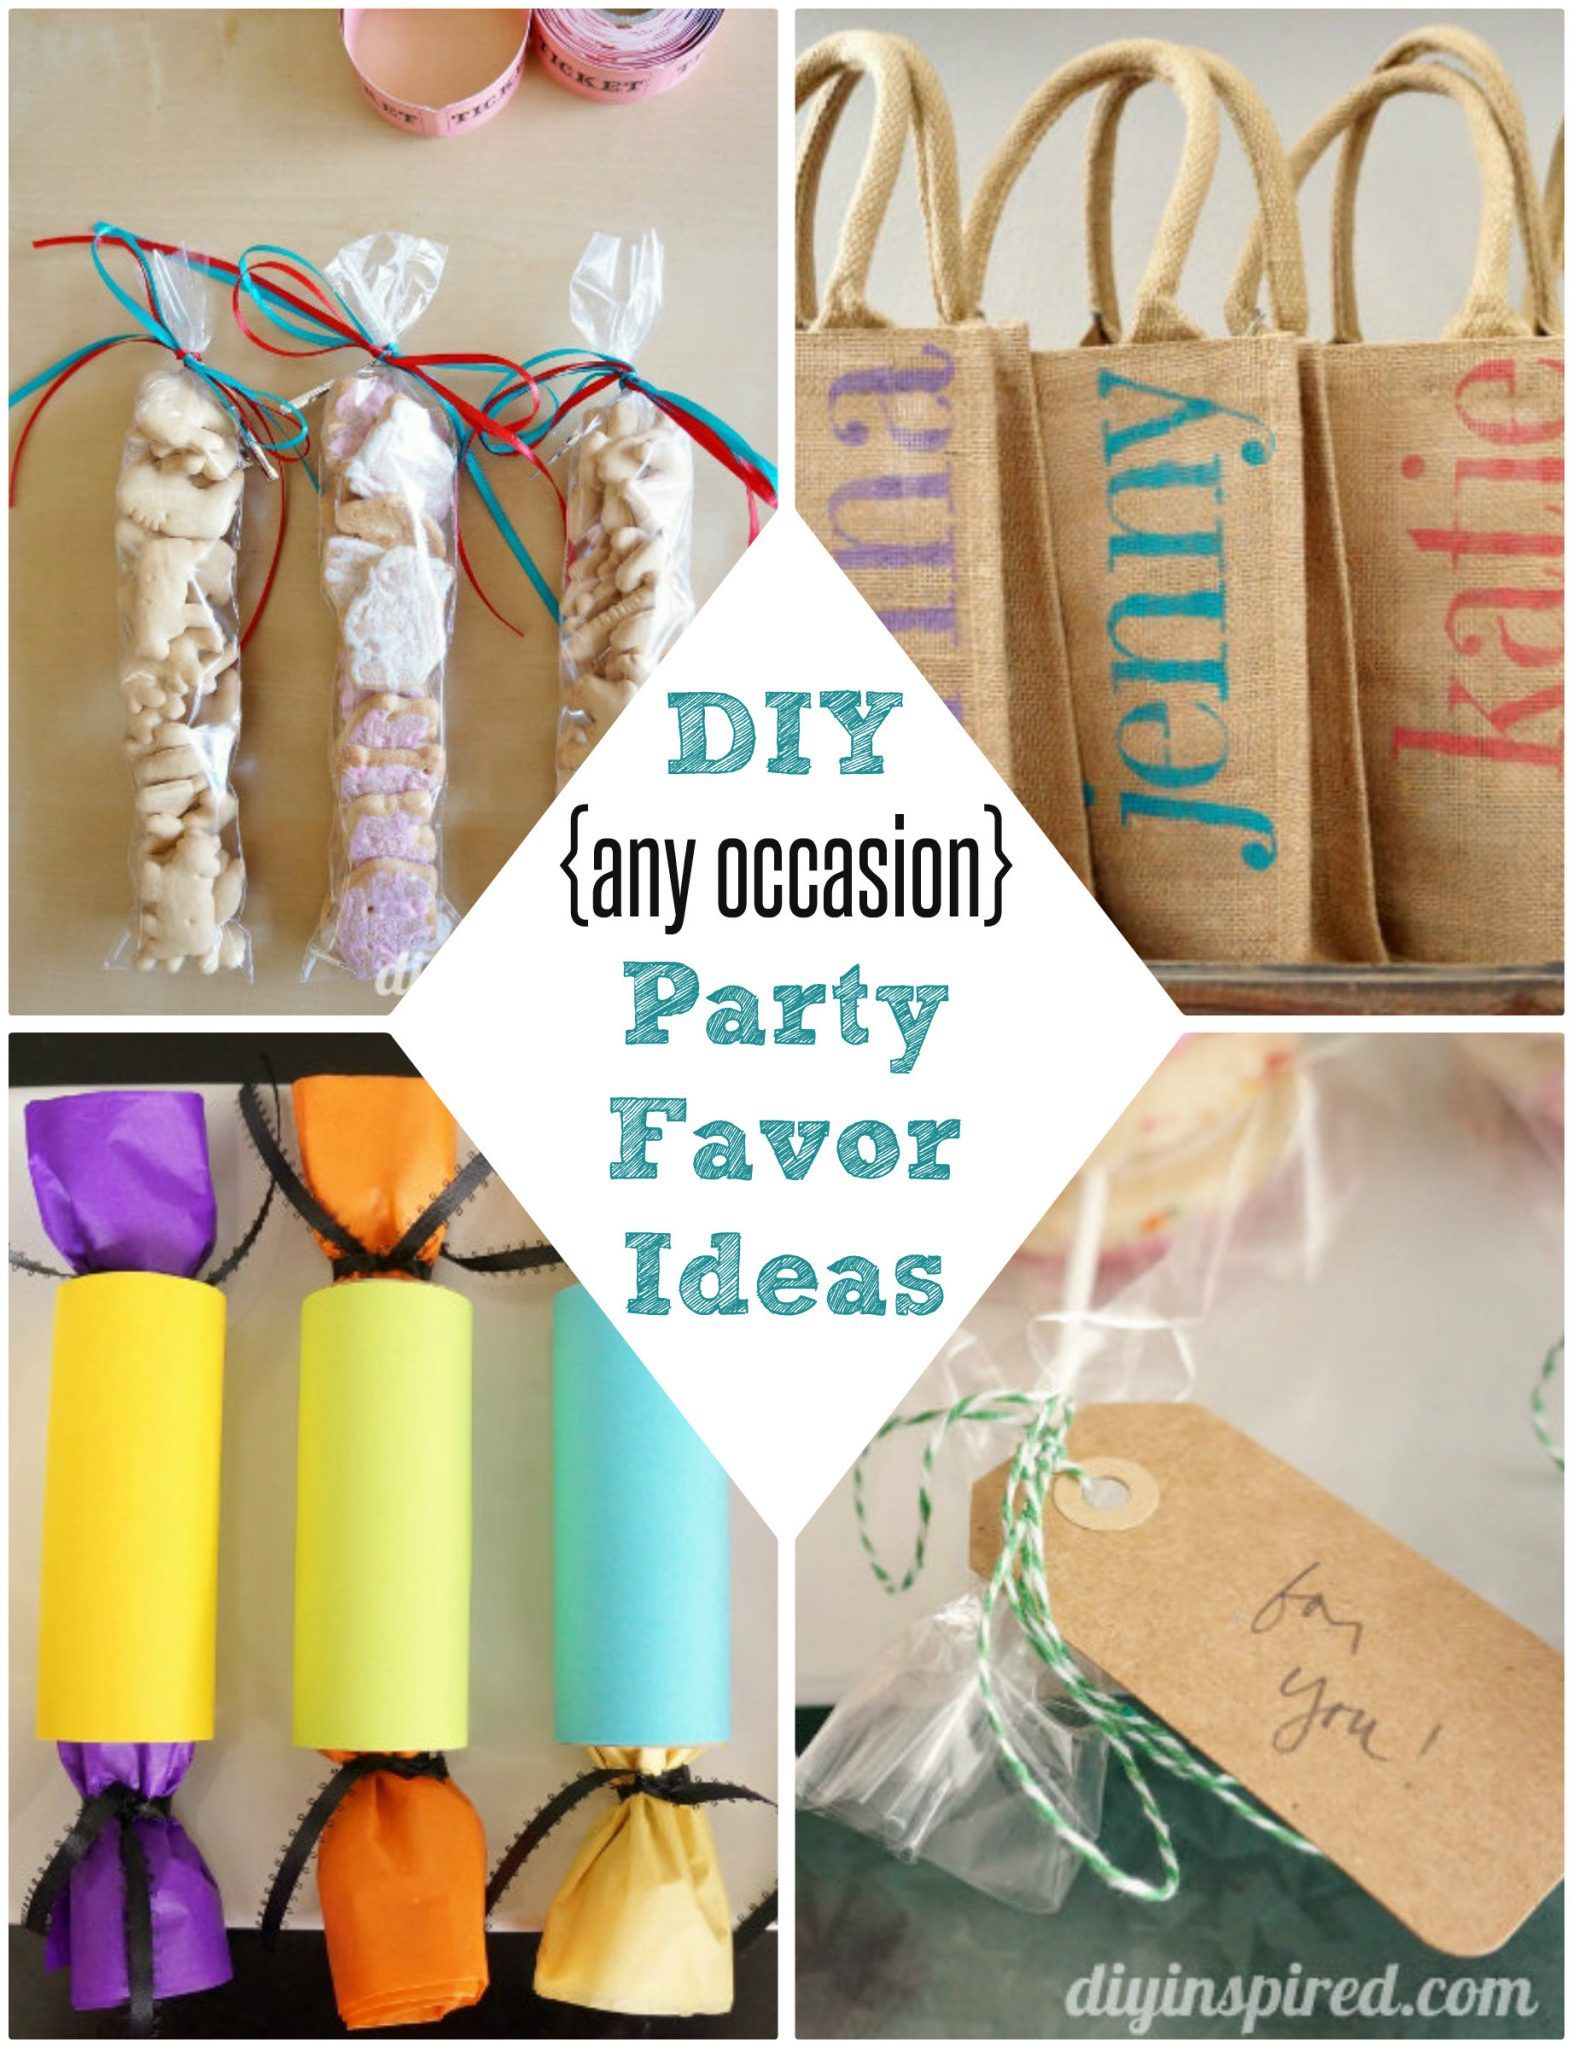 DIY Party Favor Ideas -   Party favor ideas